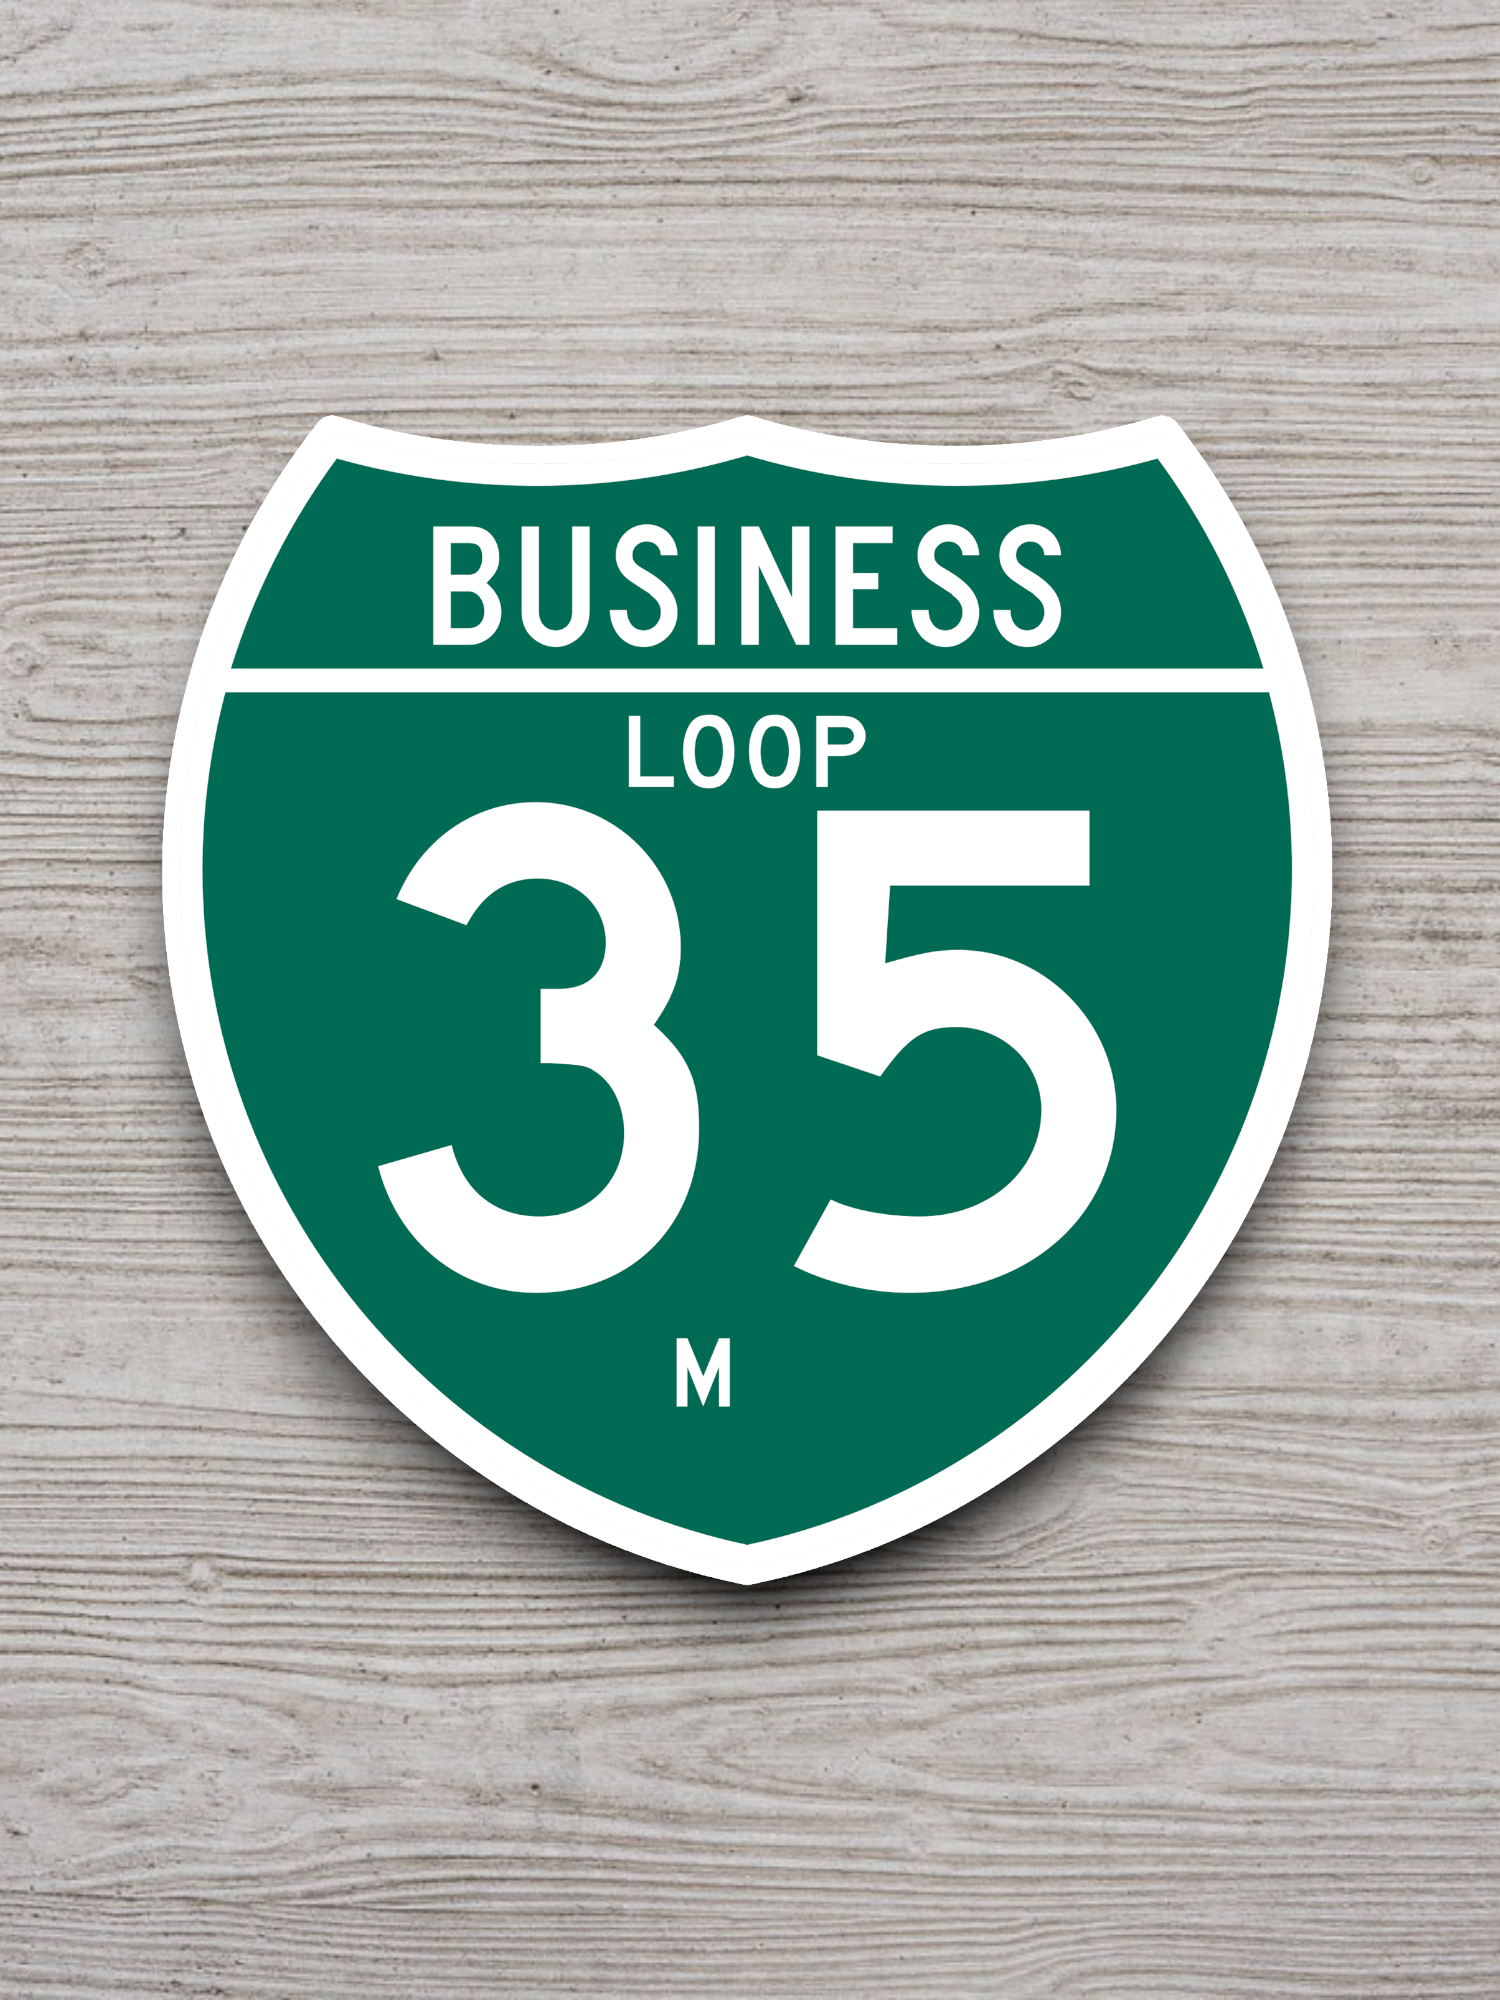 Business Spur Interstate 35-M Texas Road Sign Sticker